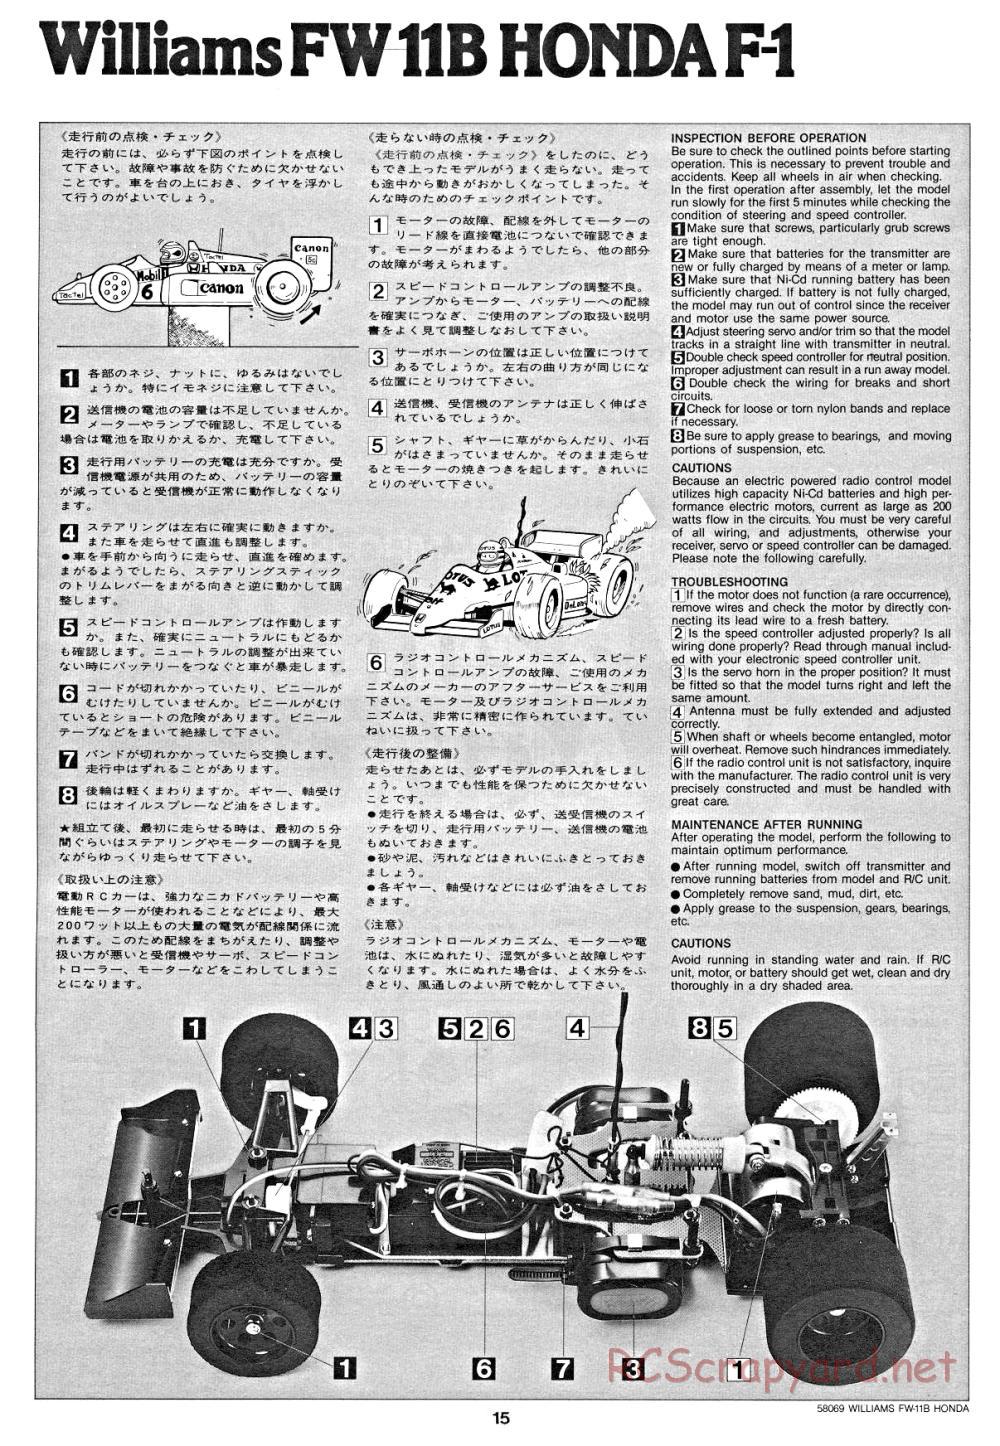 Tamiya - Williams FW-11B Honda F1 - 58069 - Manual - Page 15